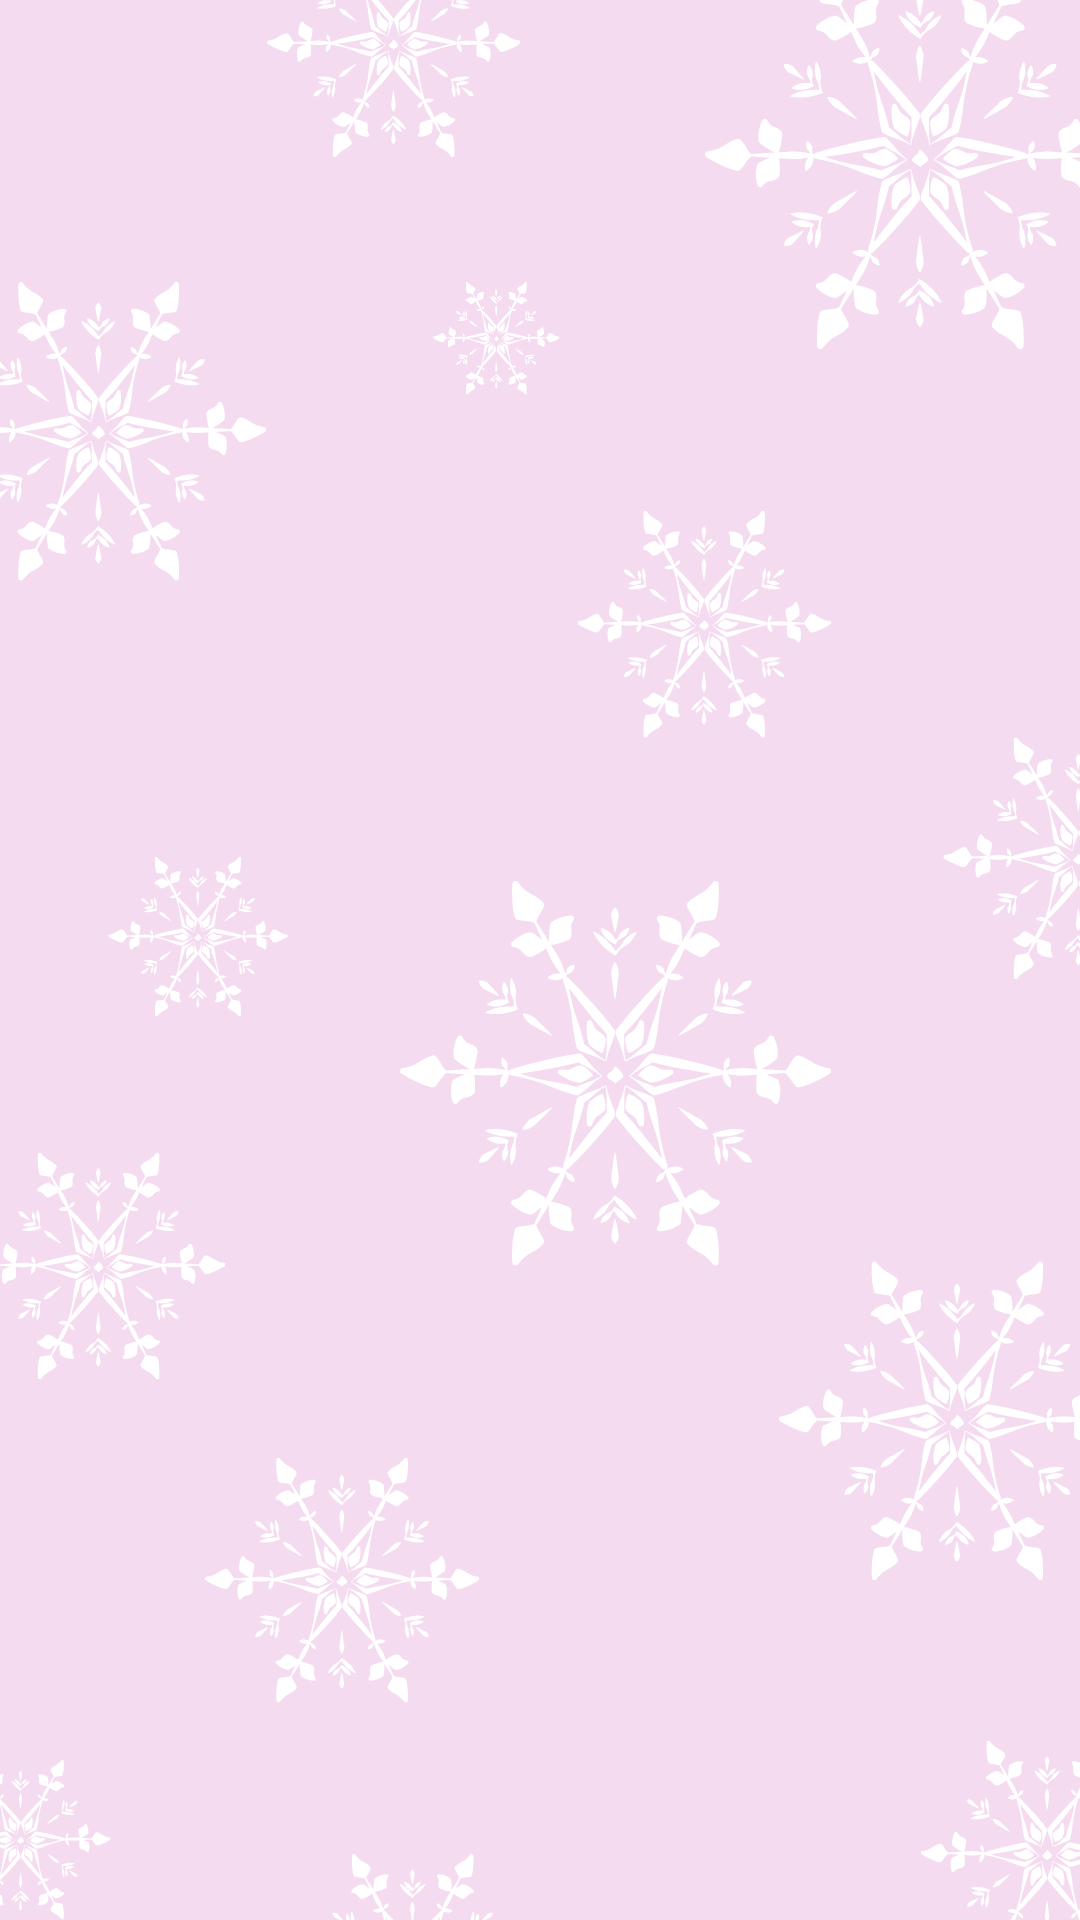 Snowflake Wallpaper❄️. Pink christmas iphone wallpaper, Snowflake wallpaper, Christmas snowflakes wallpaper